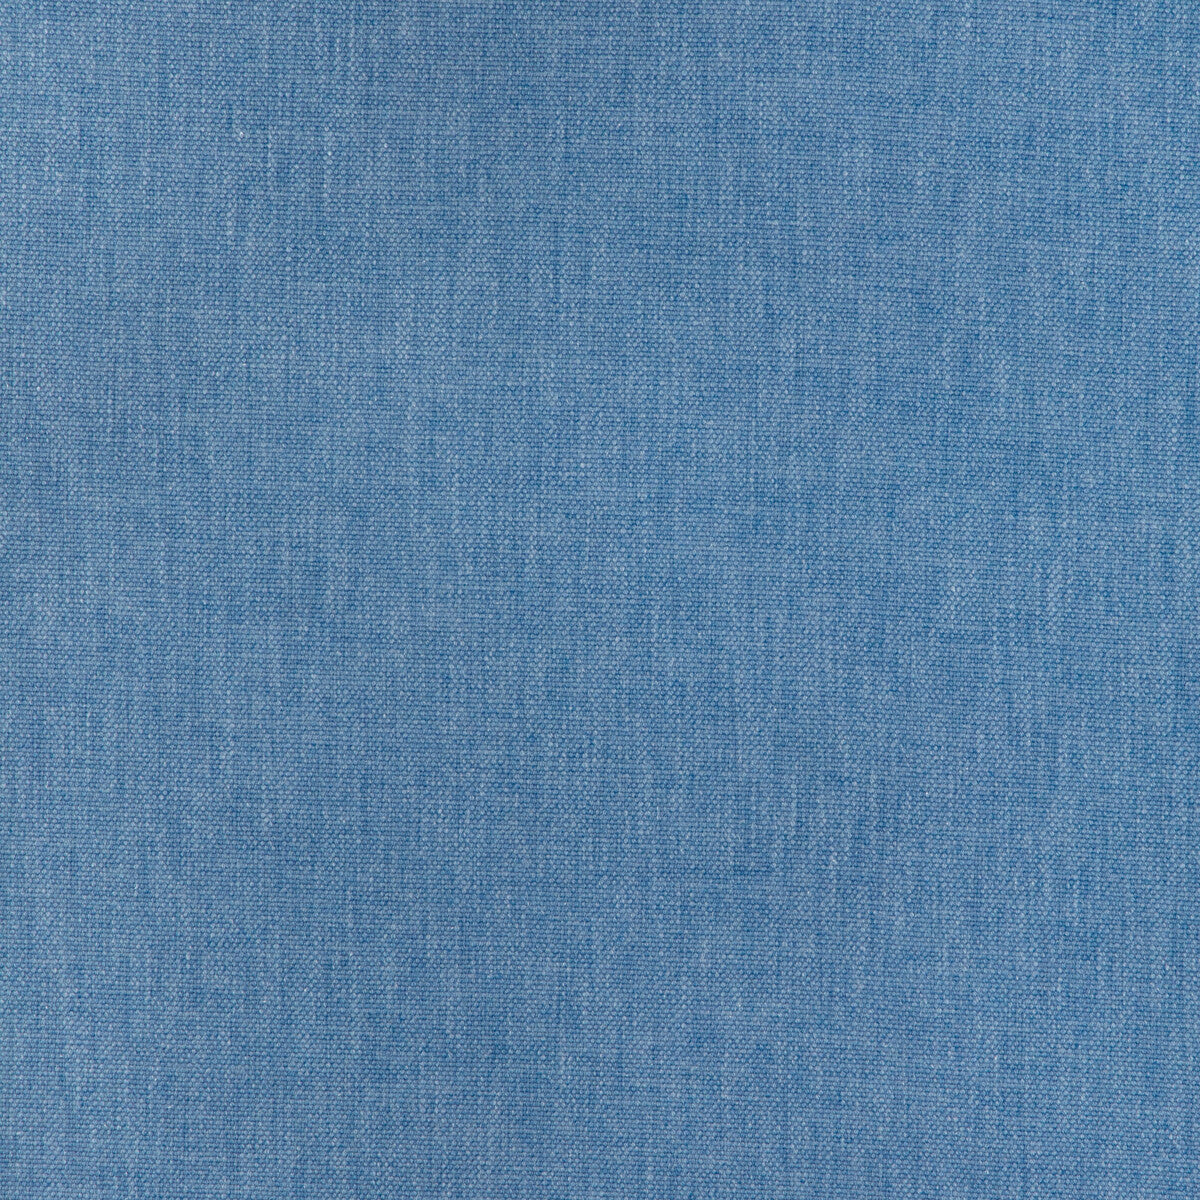 Kravet Smart fabric in 37066-5 color - pattern 37066.5.0 - by Kravet Smart